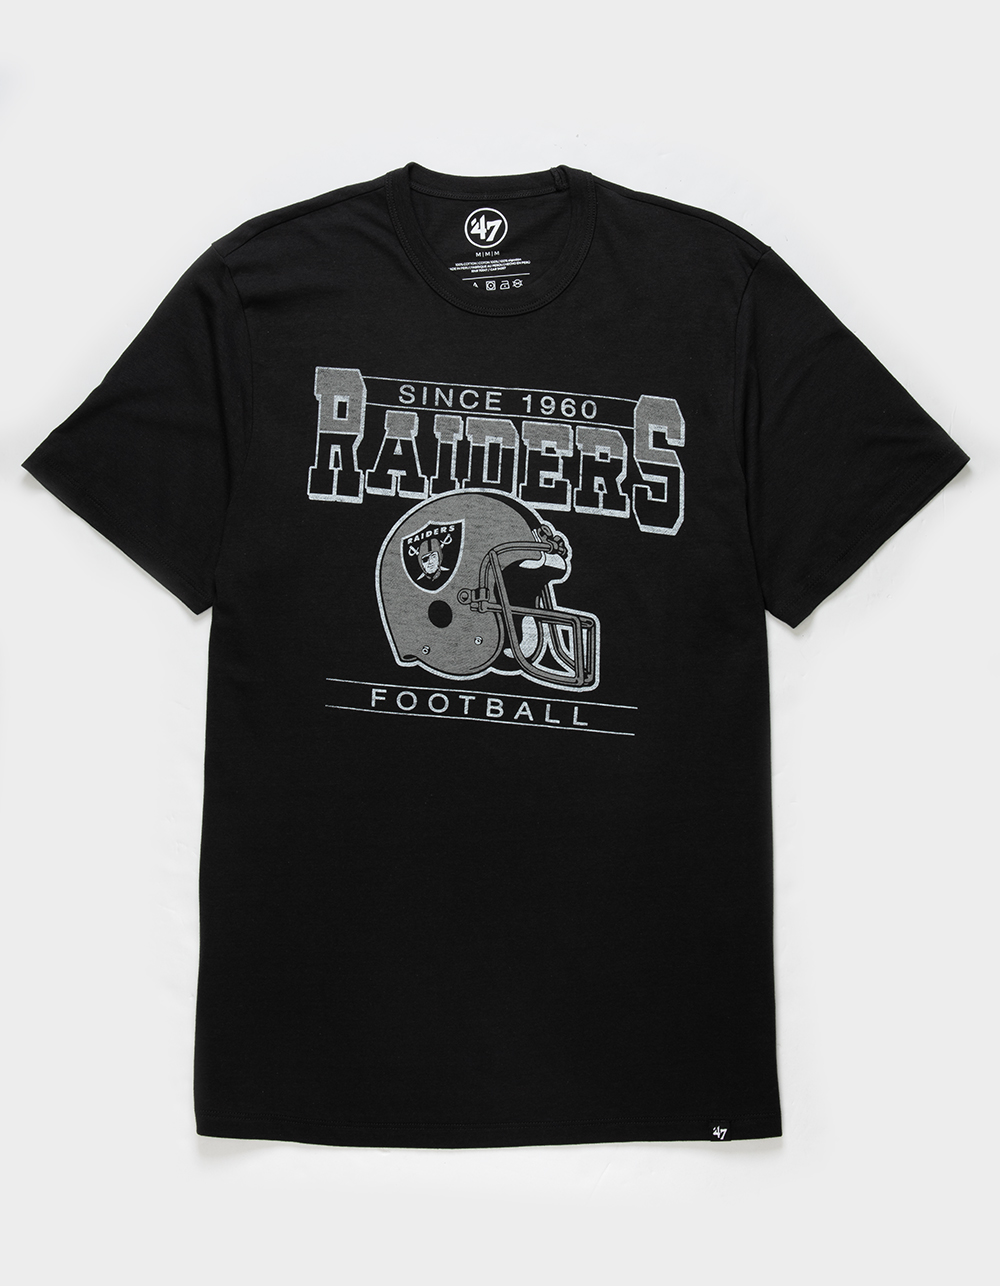 NFL:Raiders Las Vegas Raiders Mens Hooded Flannel, L